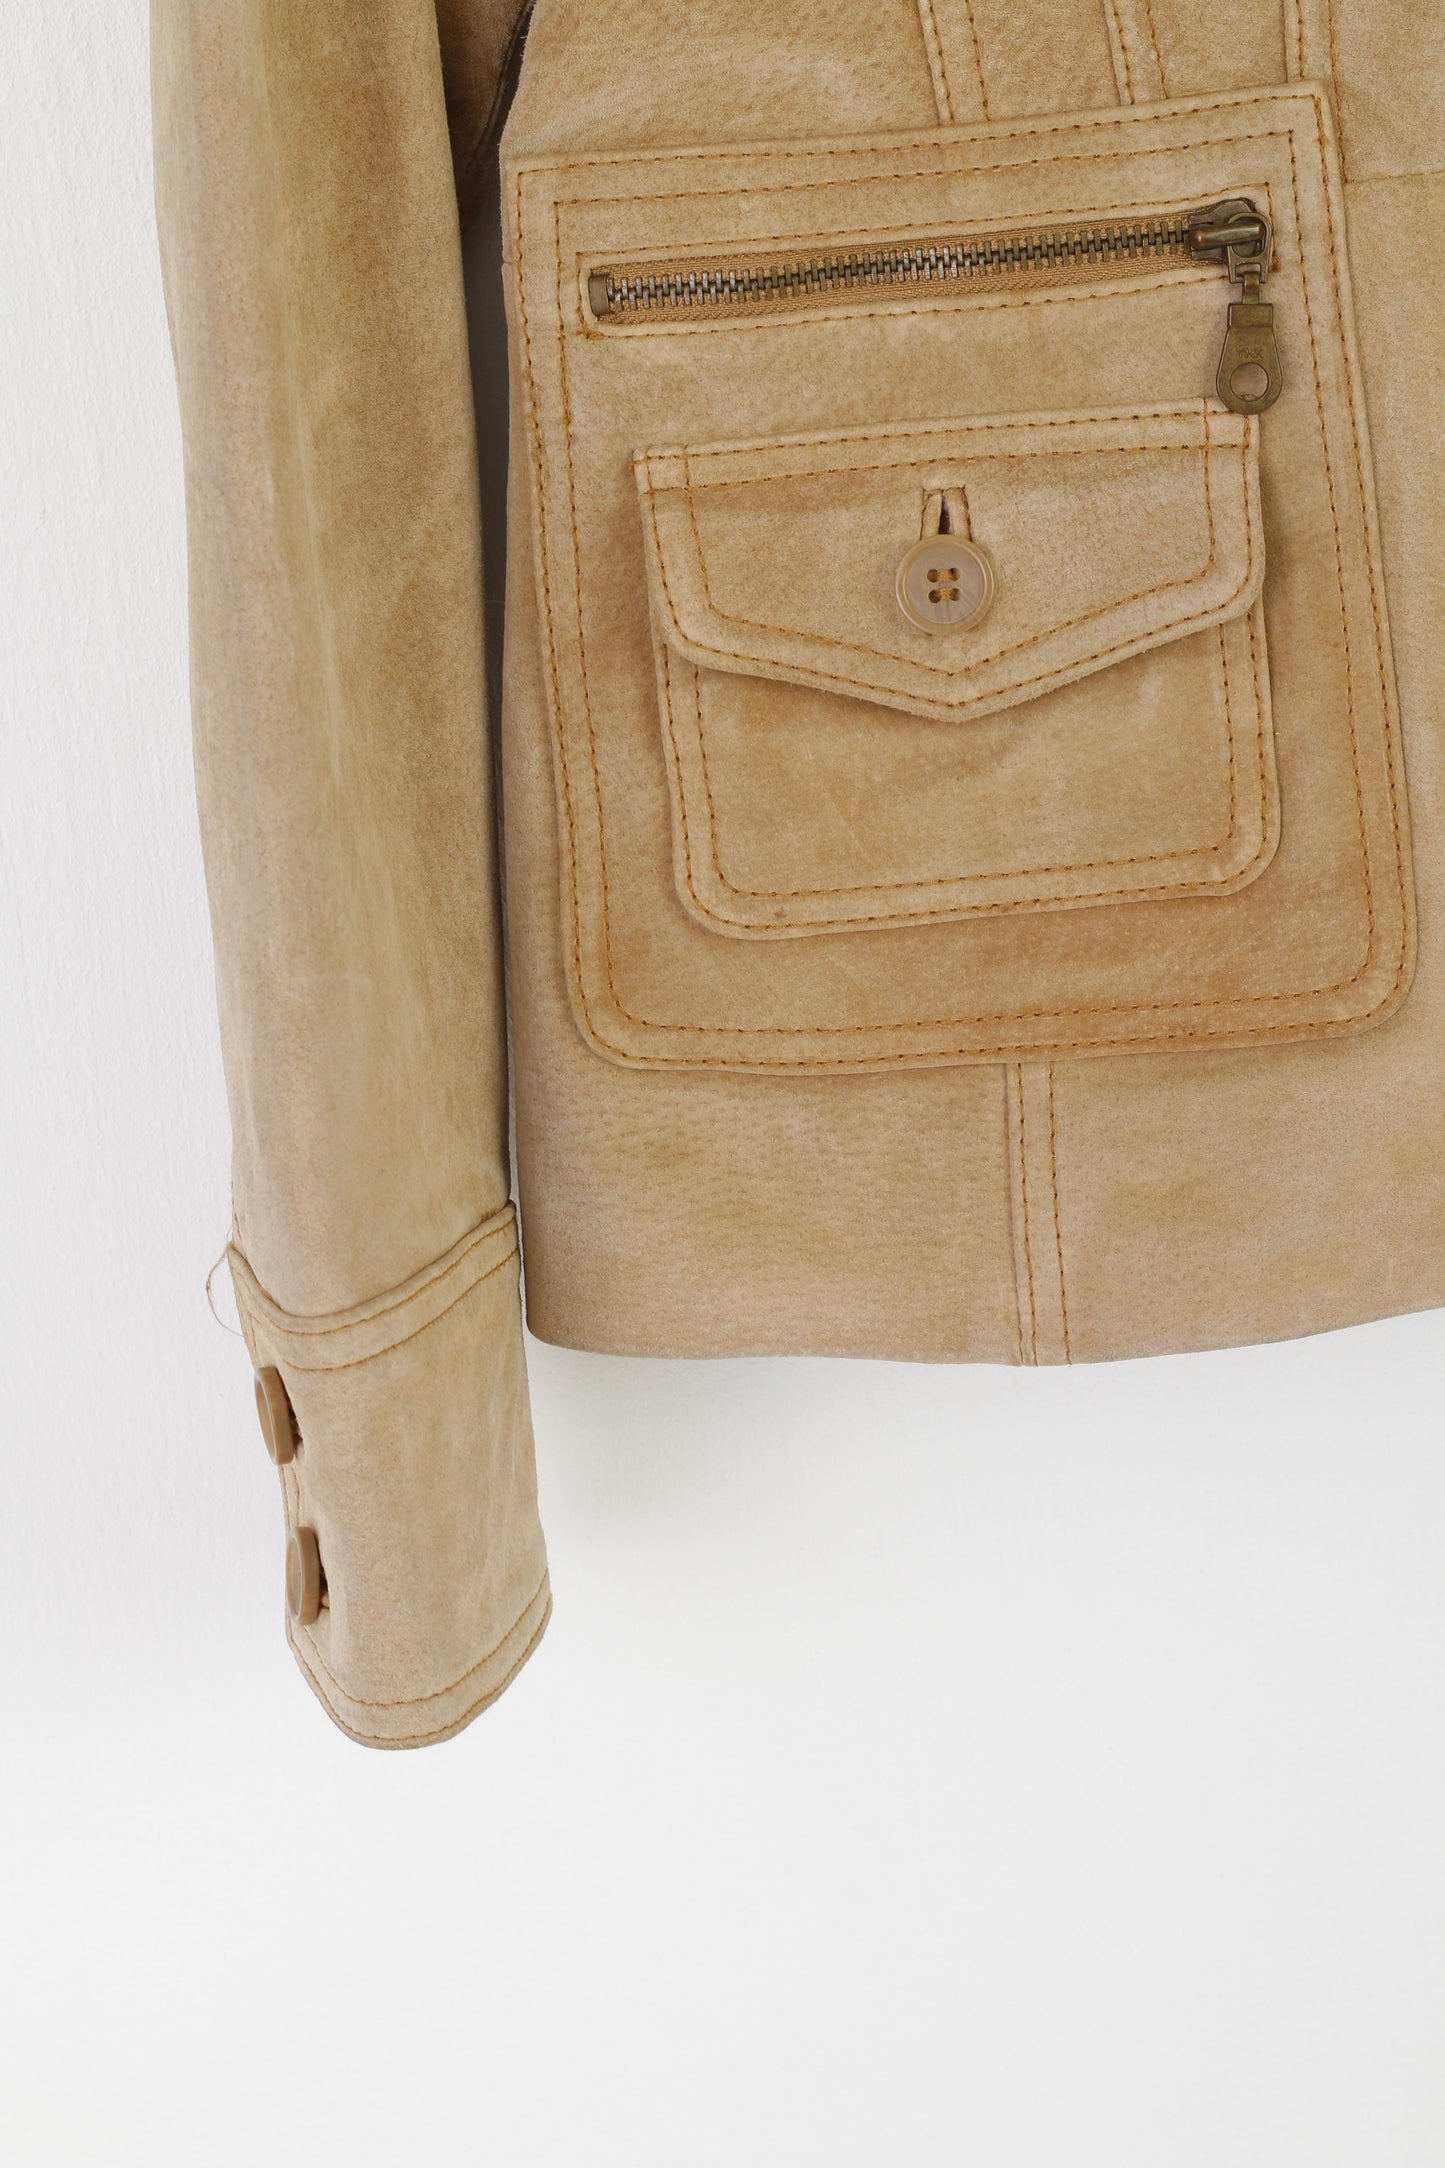 Joie de Vivre Women 10 S Jacket Beige Leather Suede Vintage Boho Shoulder Pads Top